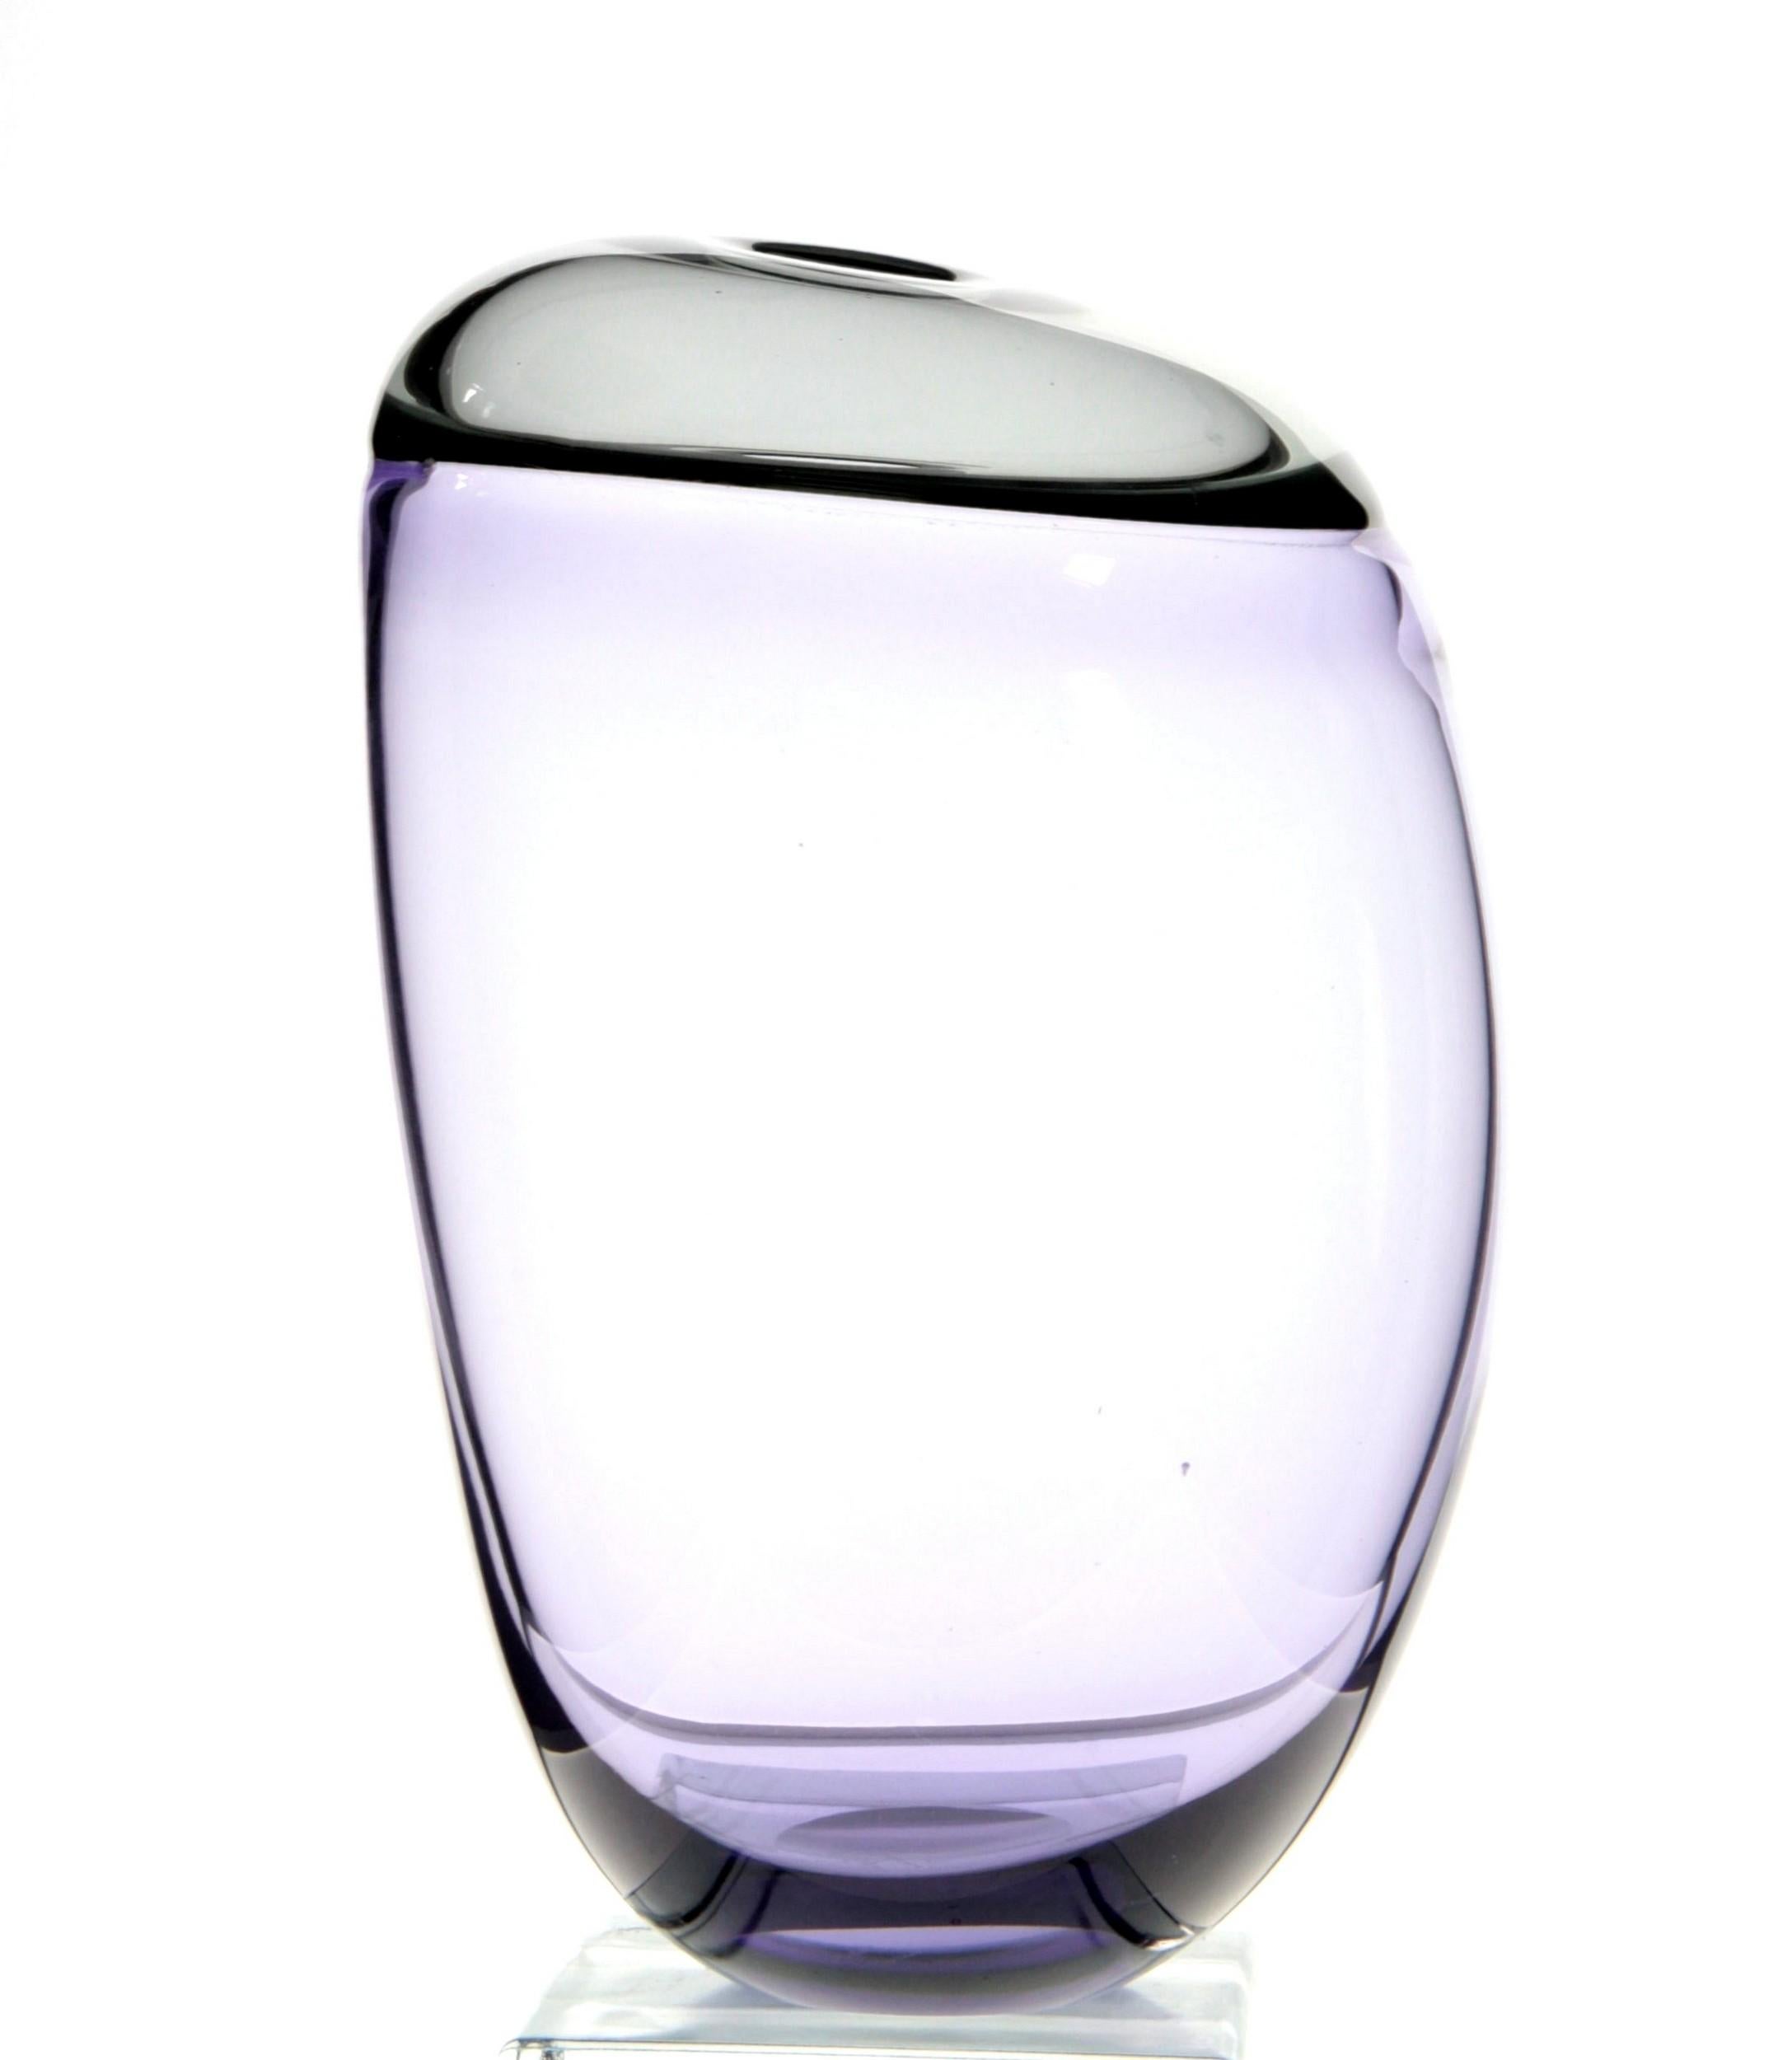 Paolo Crepax Asimmetrico Organic Vase Amethyst Gray Incalmo Murano Glass, Signed 2